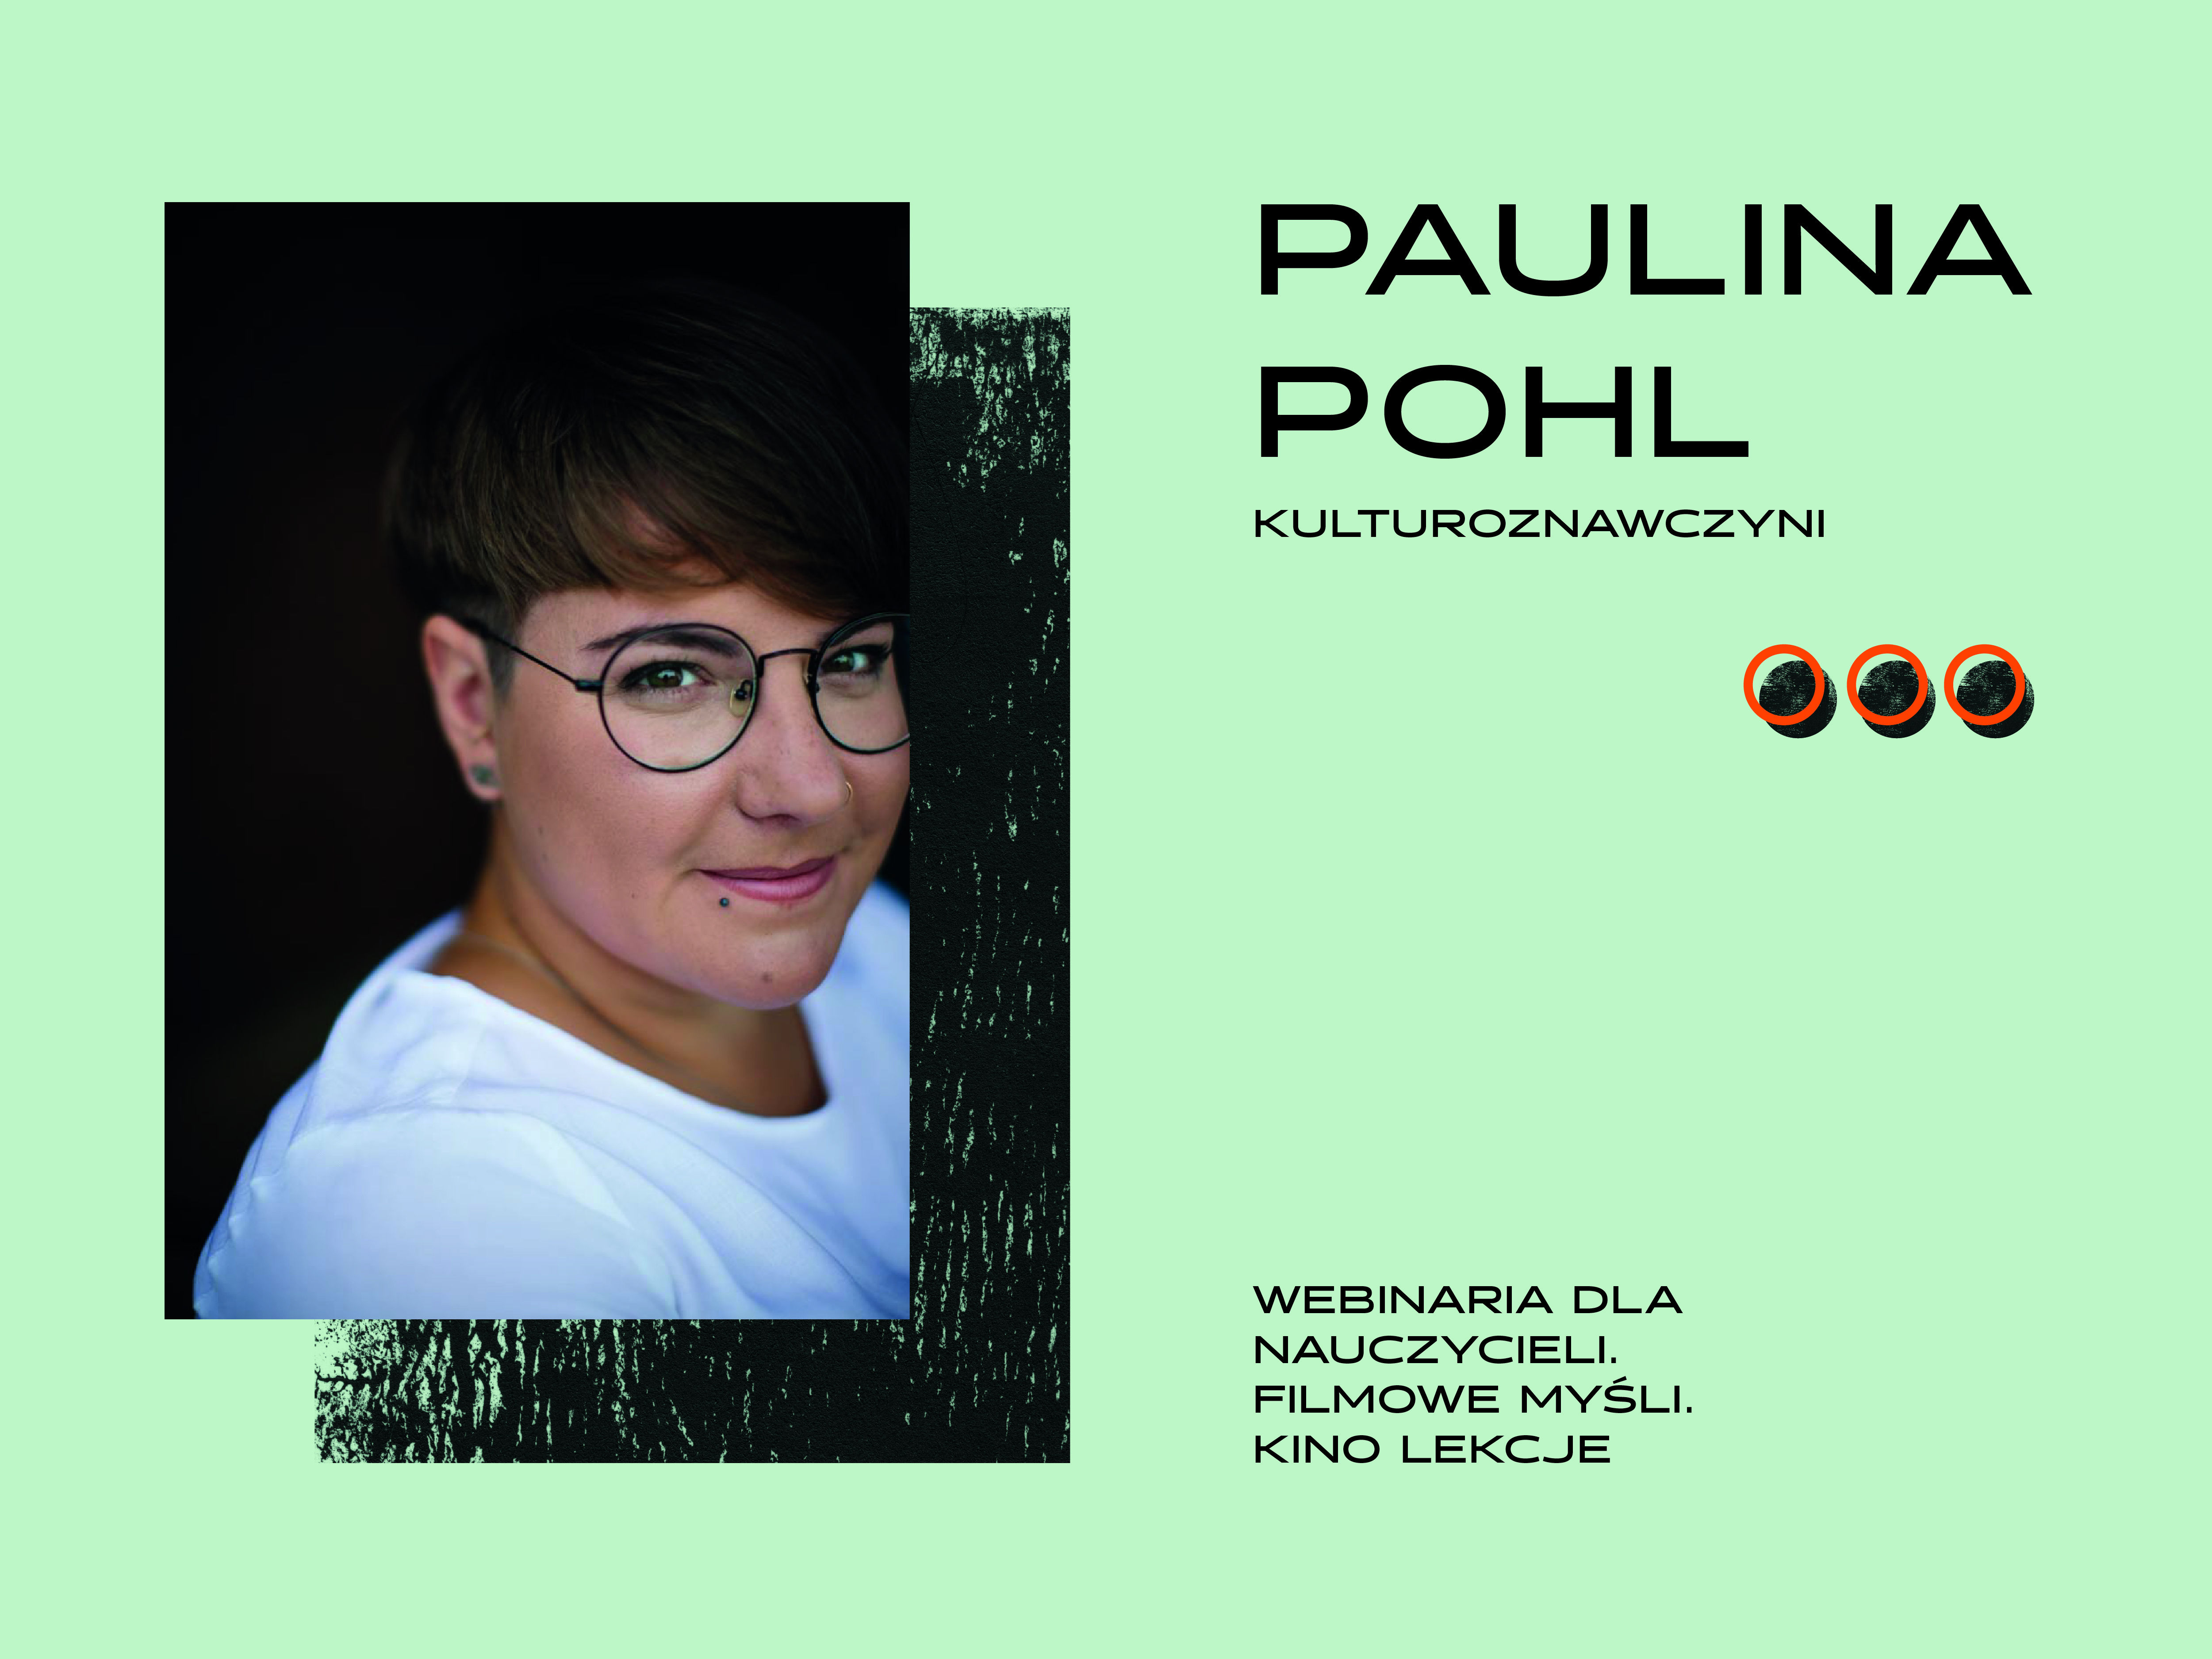 Portret Pauliny Pohl, mat. PFF